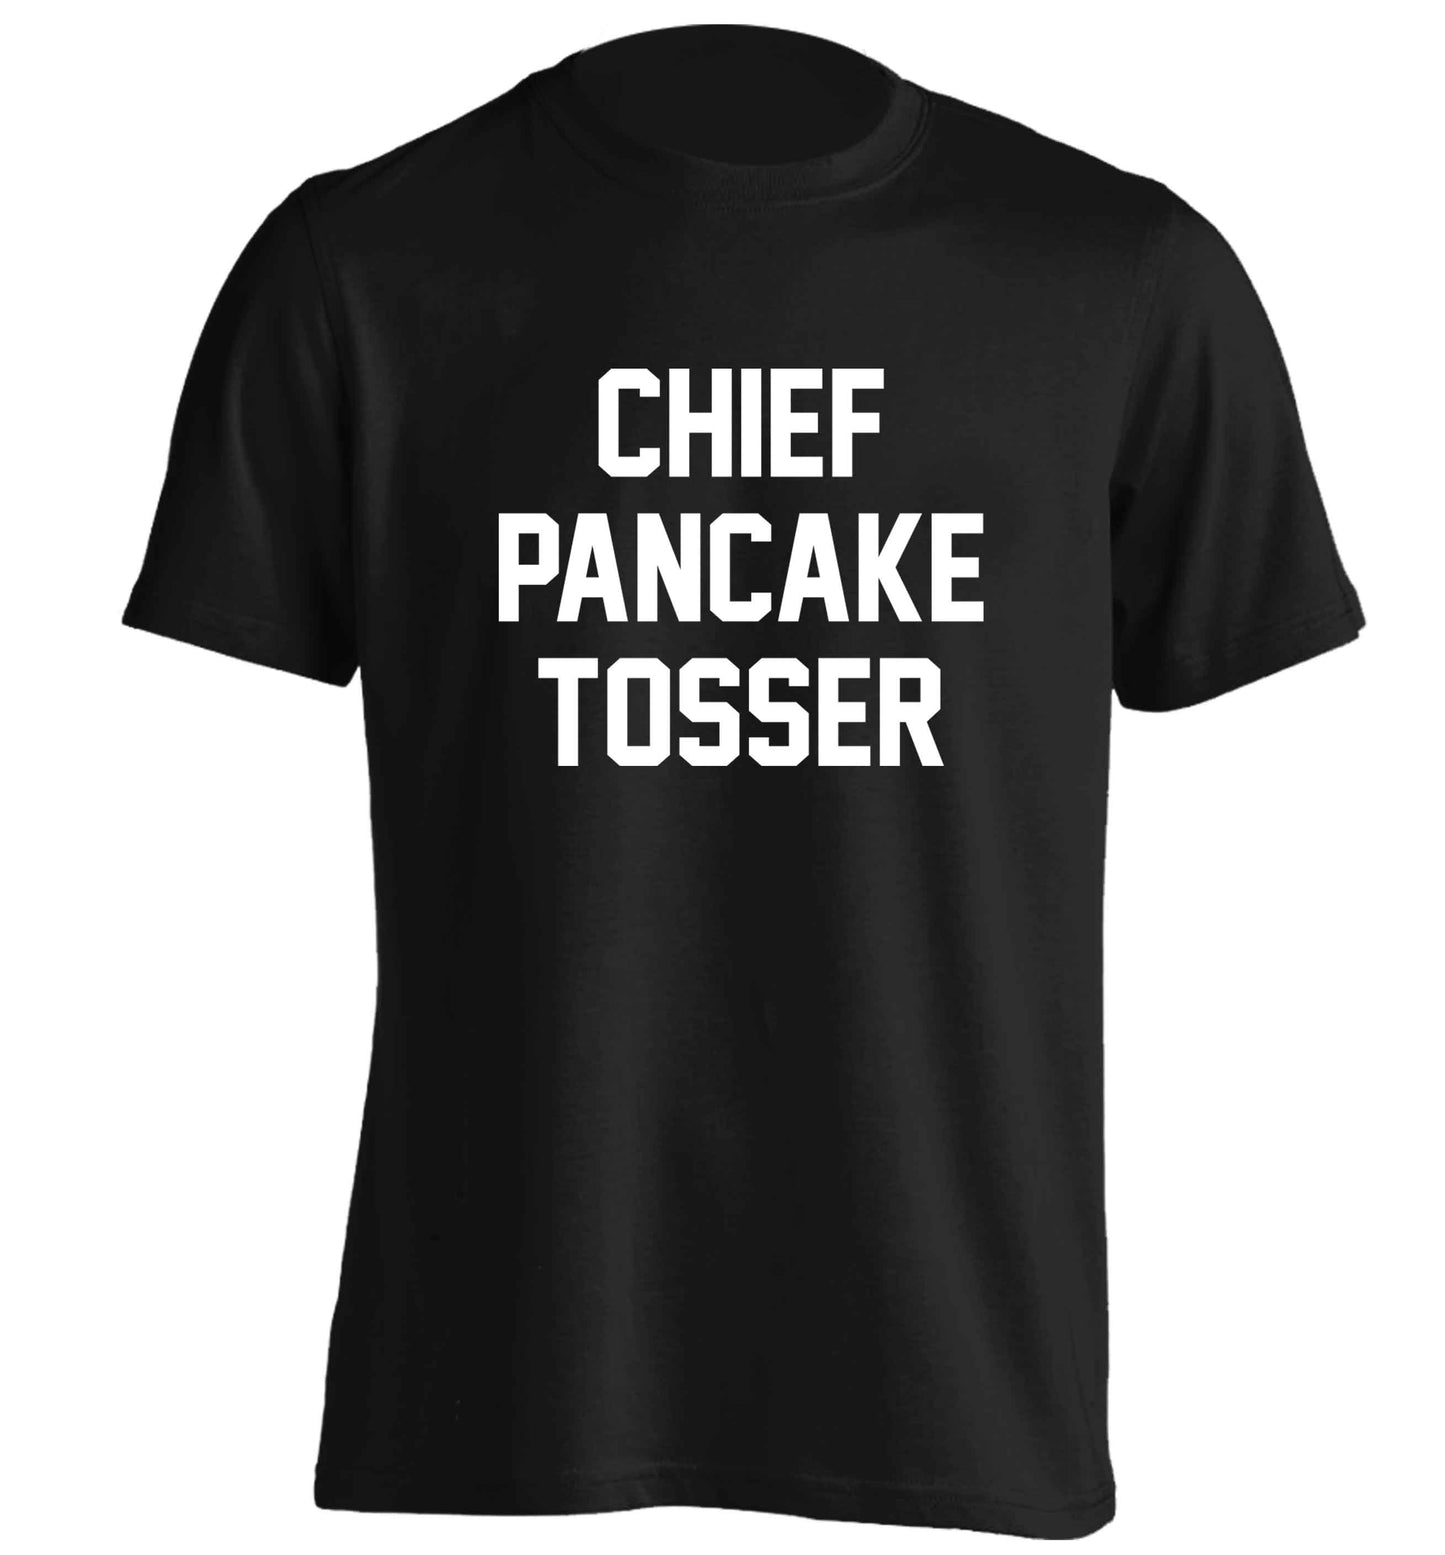 Chief pancake tosser adults unisex black Tshirt 2XL